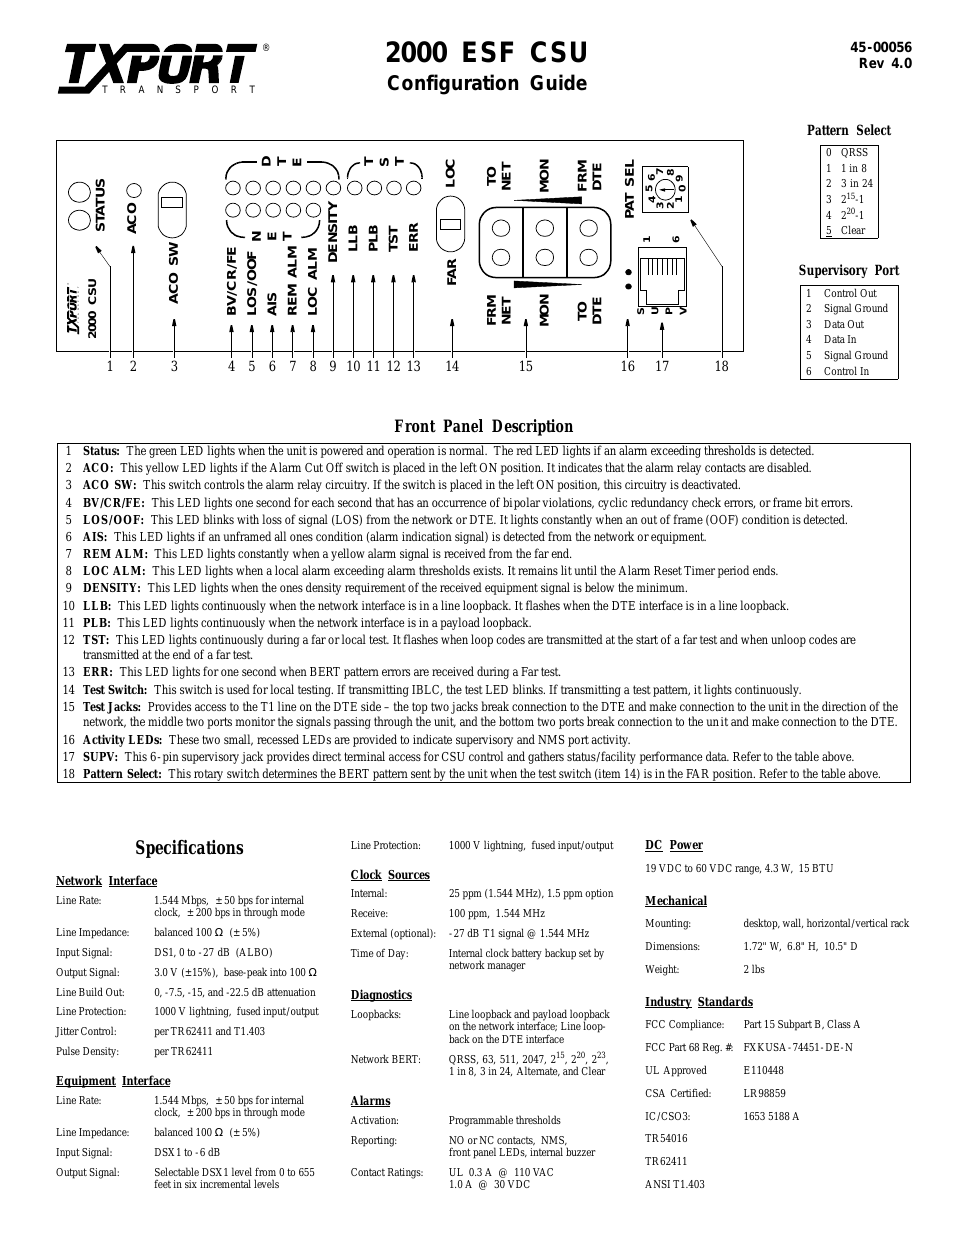 2000 ESF CSU Standalone (CG) Configuration/Installation Guide